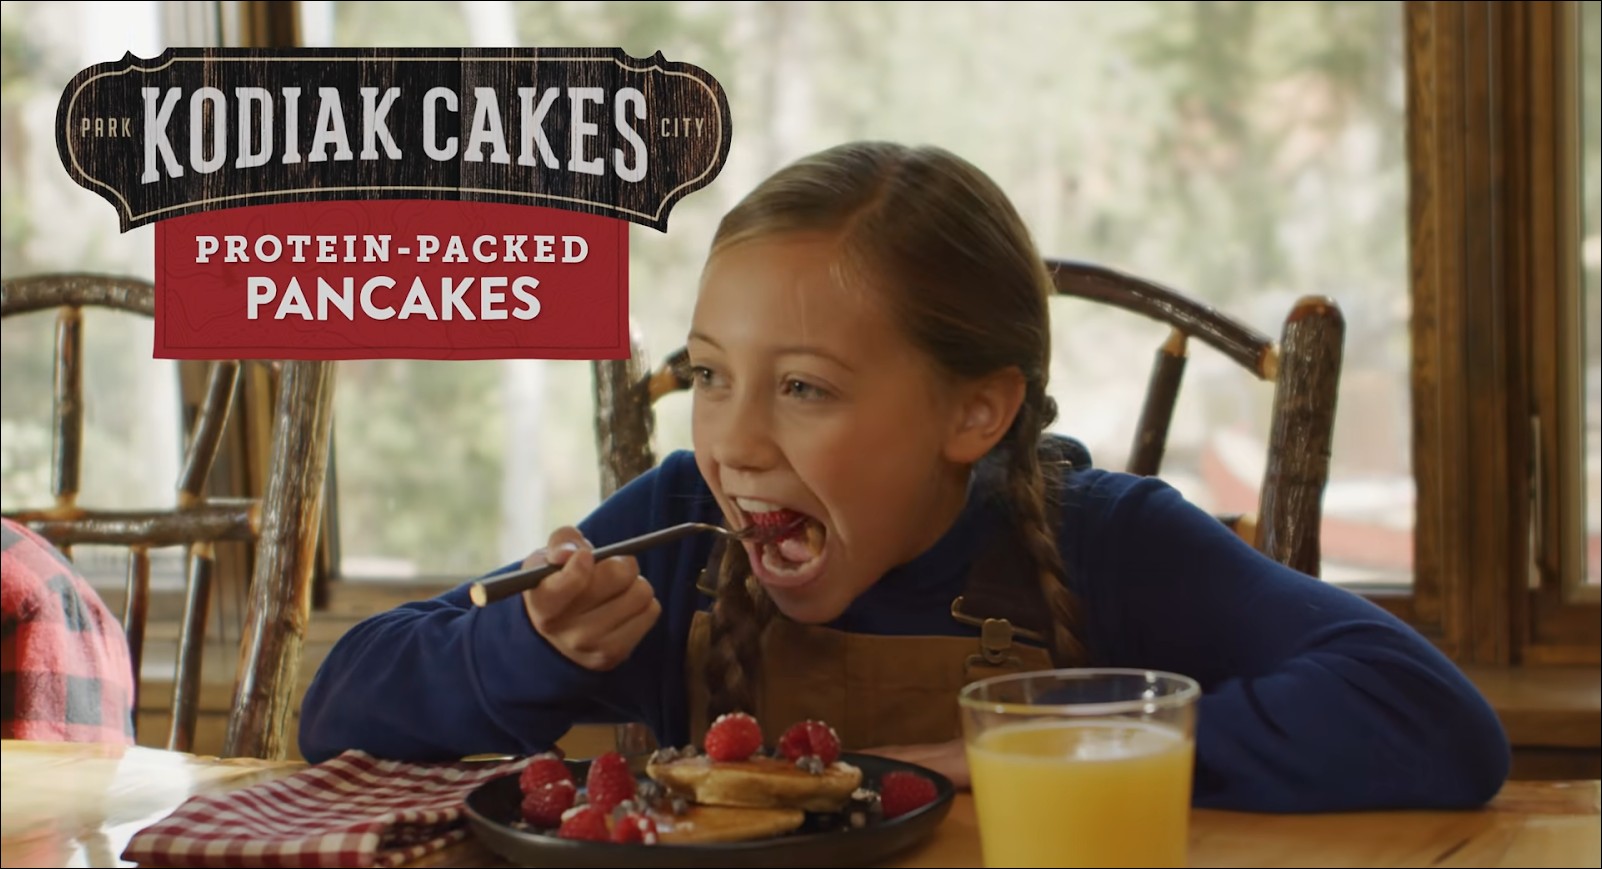 Kodiak Cakes video marketing strategy